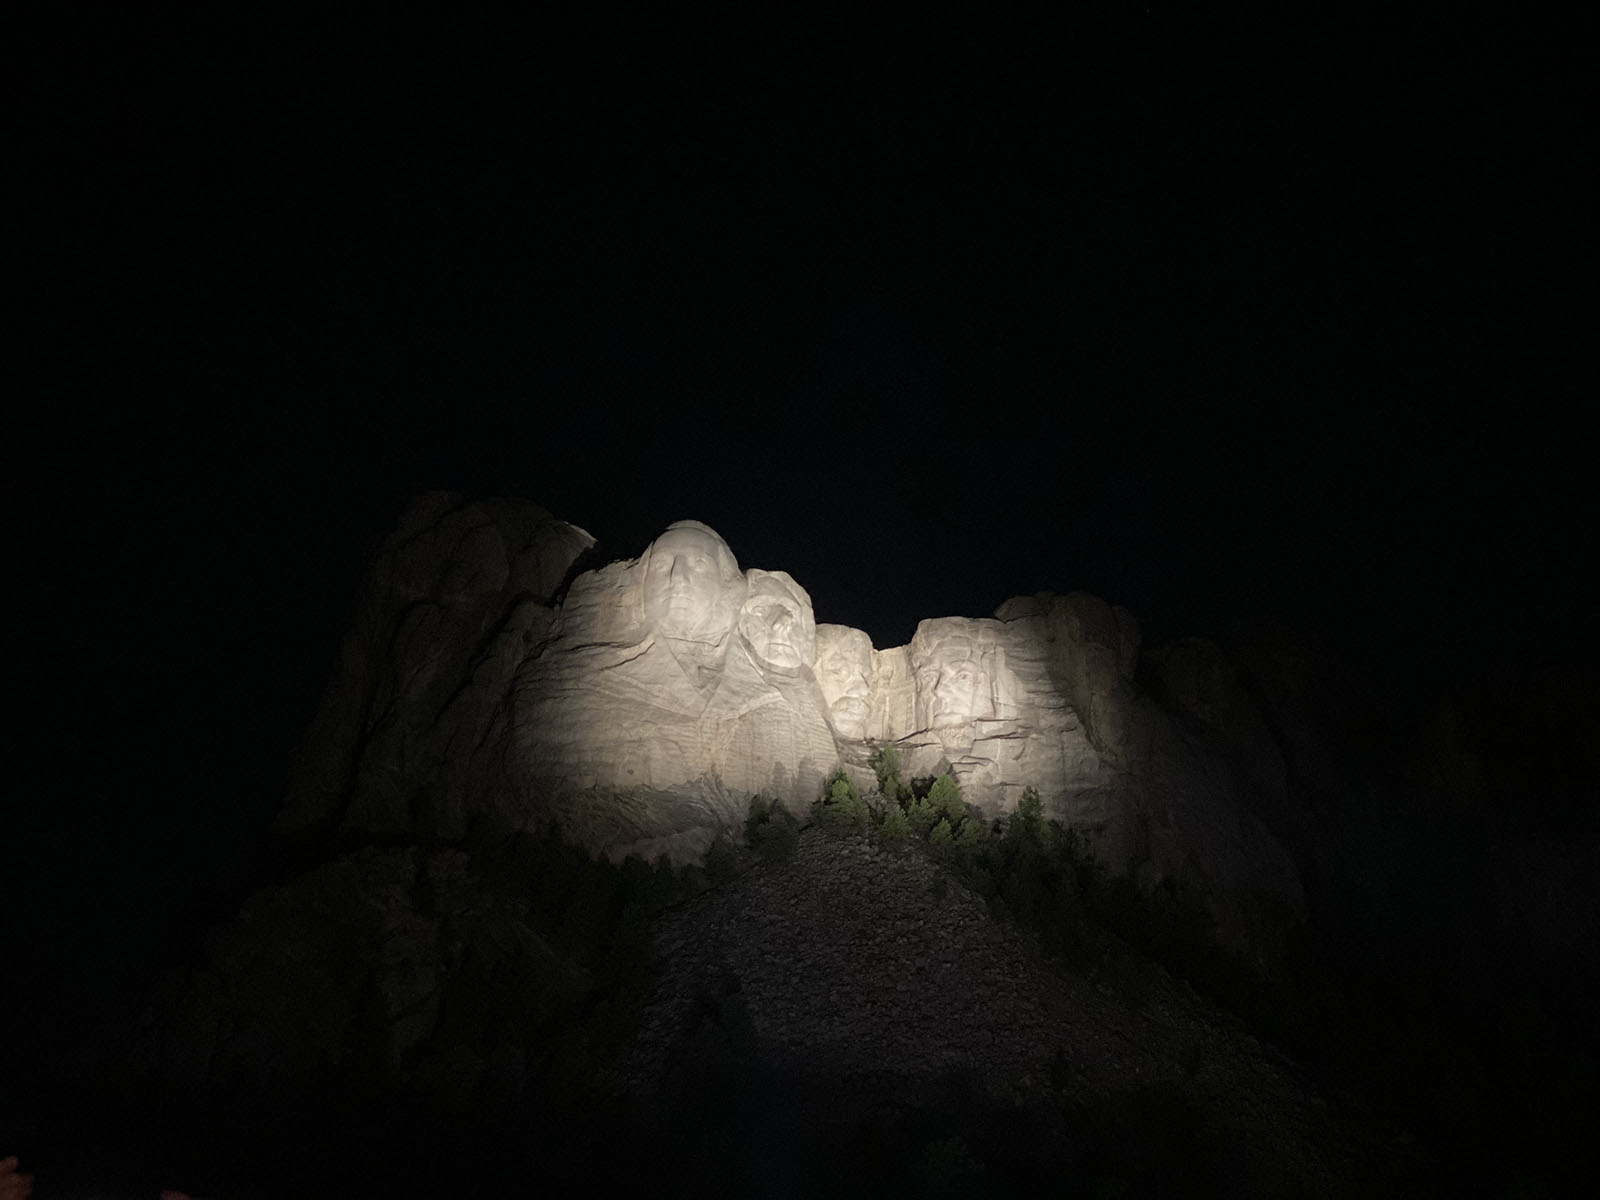 Mount Rushmore at night. Credit: Carolina Valenzuela